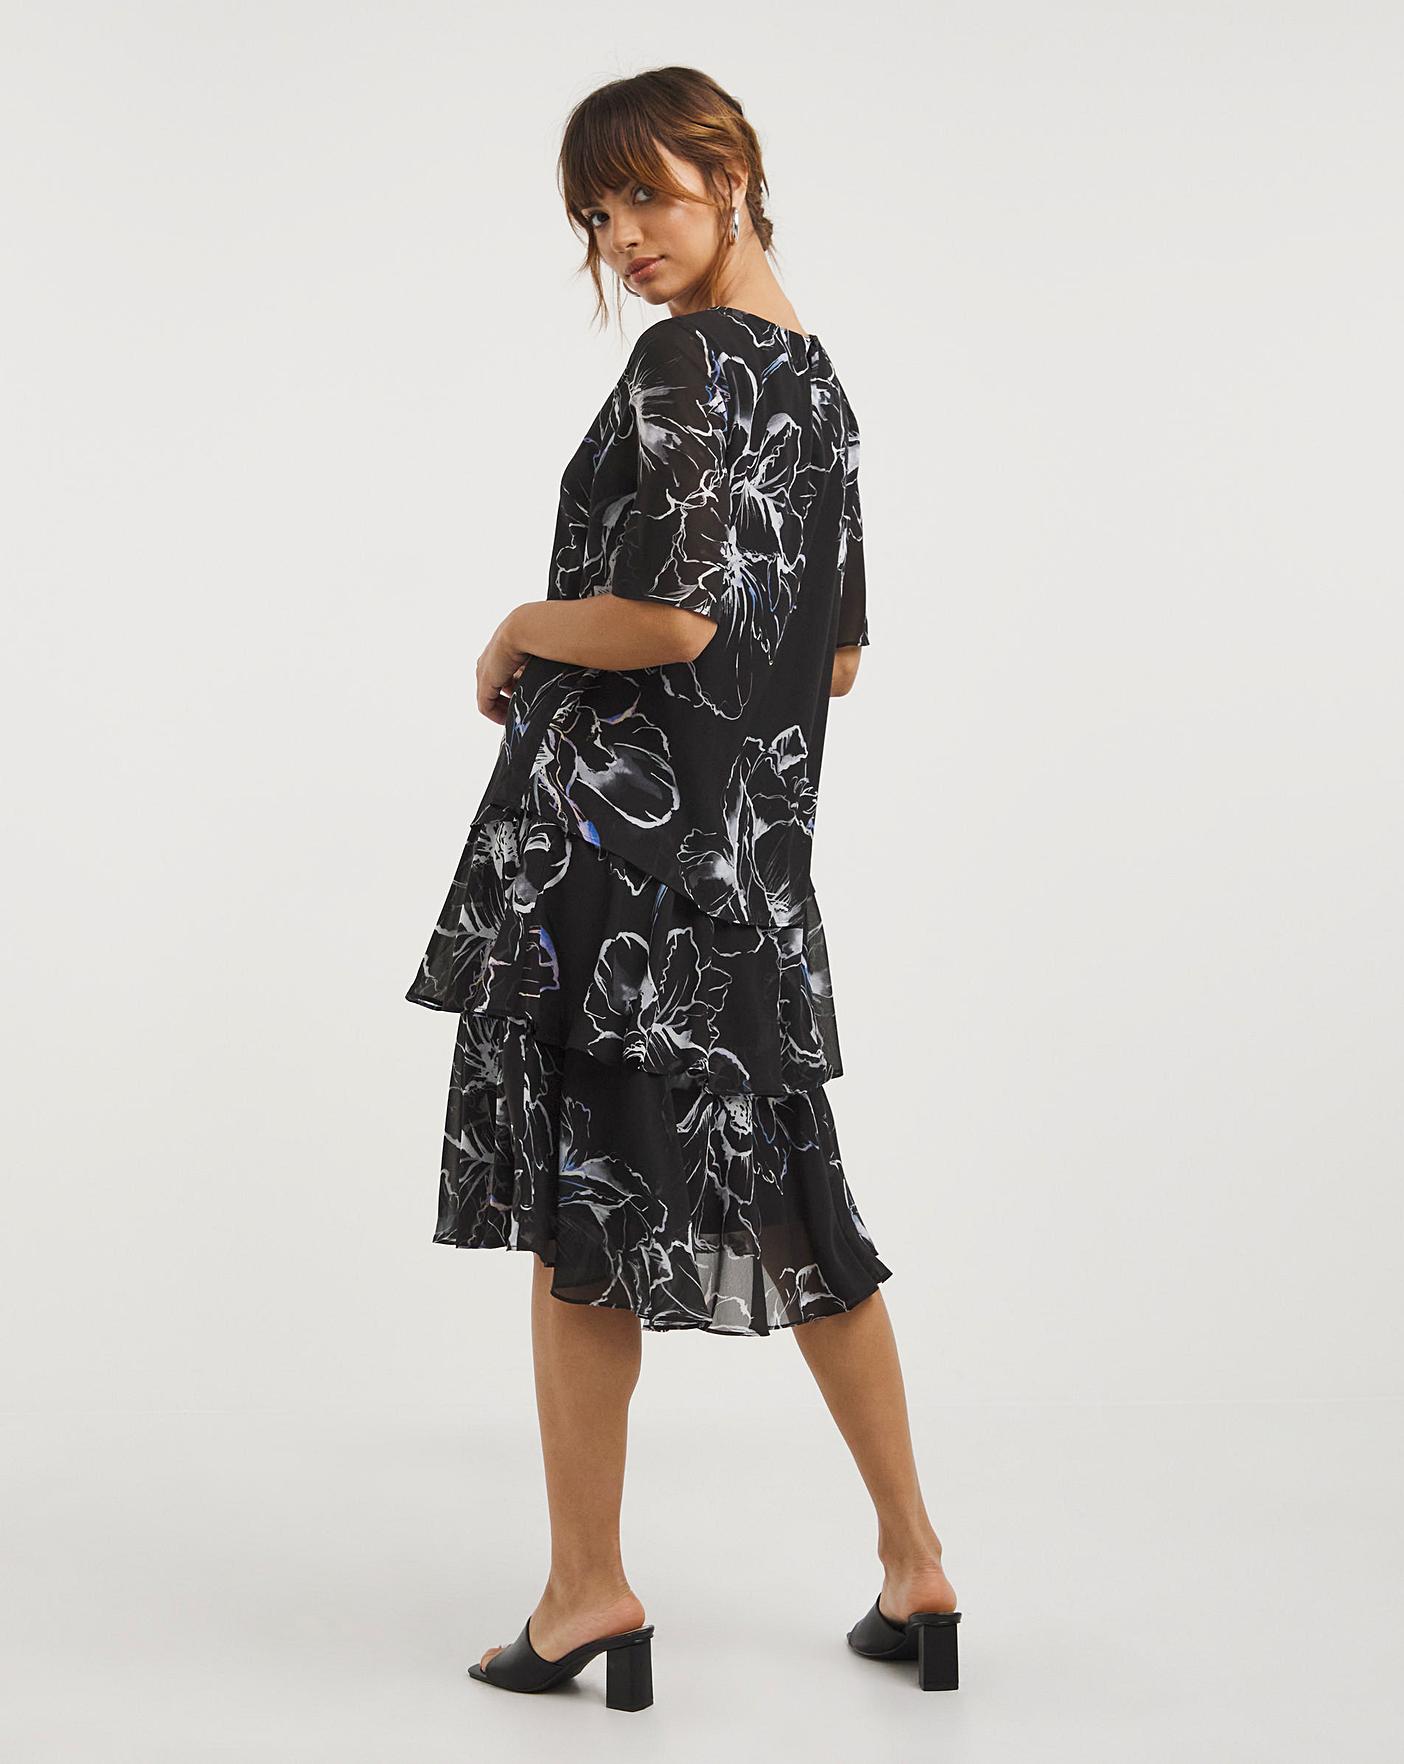 Joanna Hope Tiered Printed Dress | J D Williams